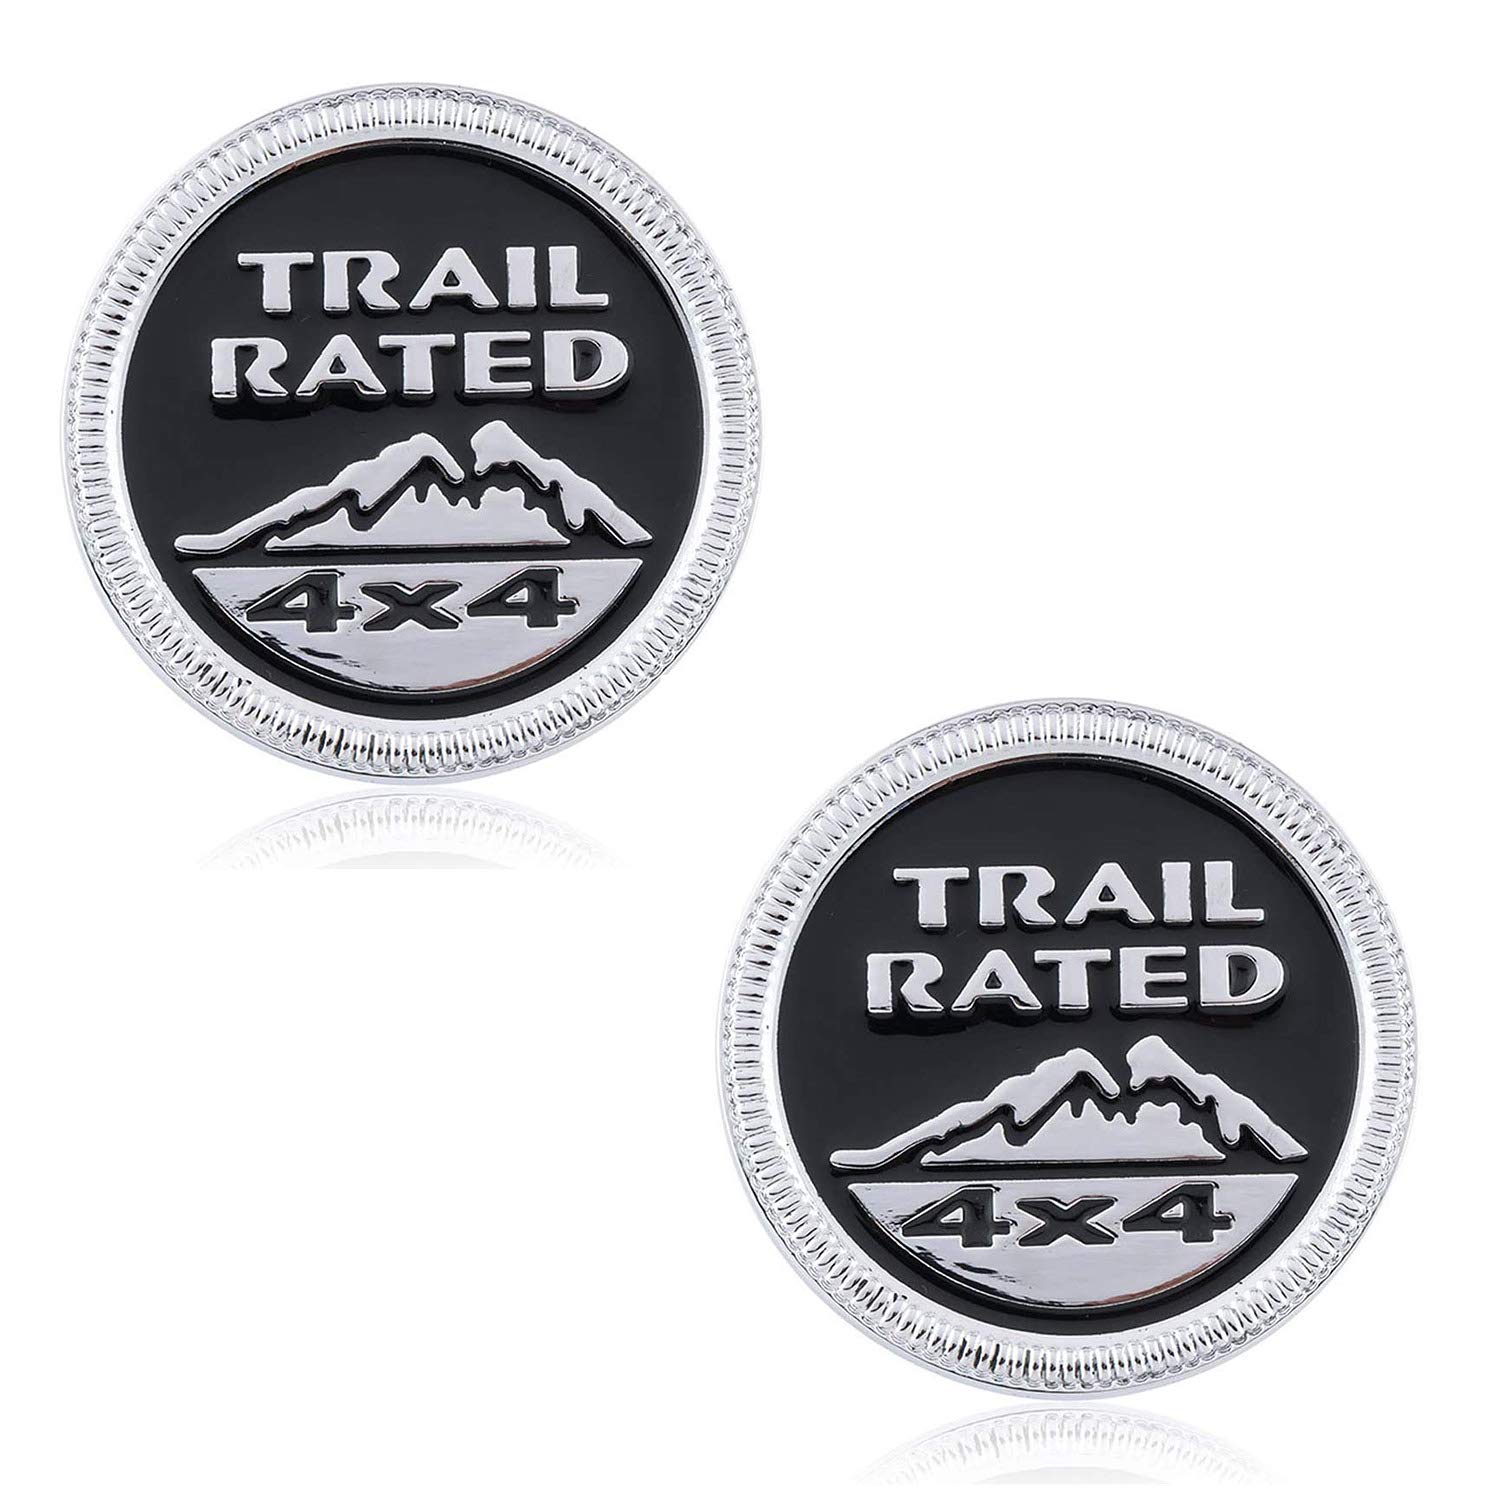 HAOXUAN 2 Stück Trail bewertet 4x4 Metall Emblem Abzeichen Aufkleber Geeignet für Jeep Wrangler Cherokee Liberty,Silver+Black